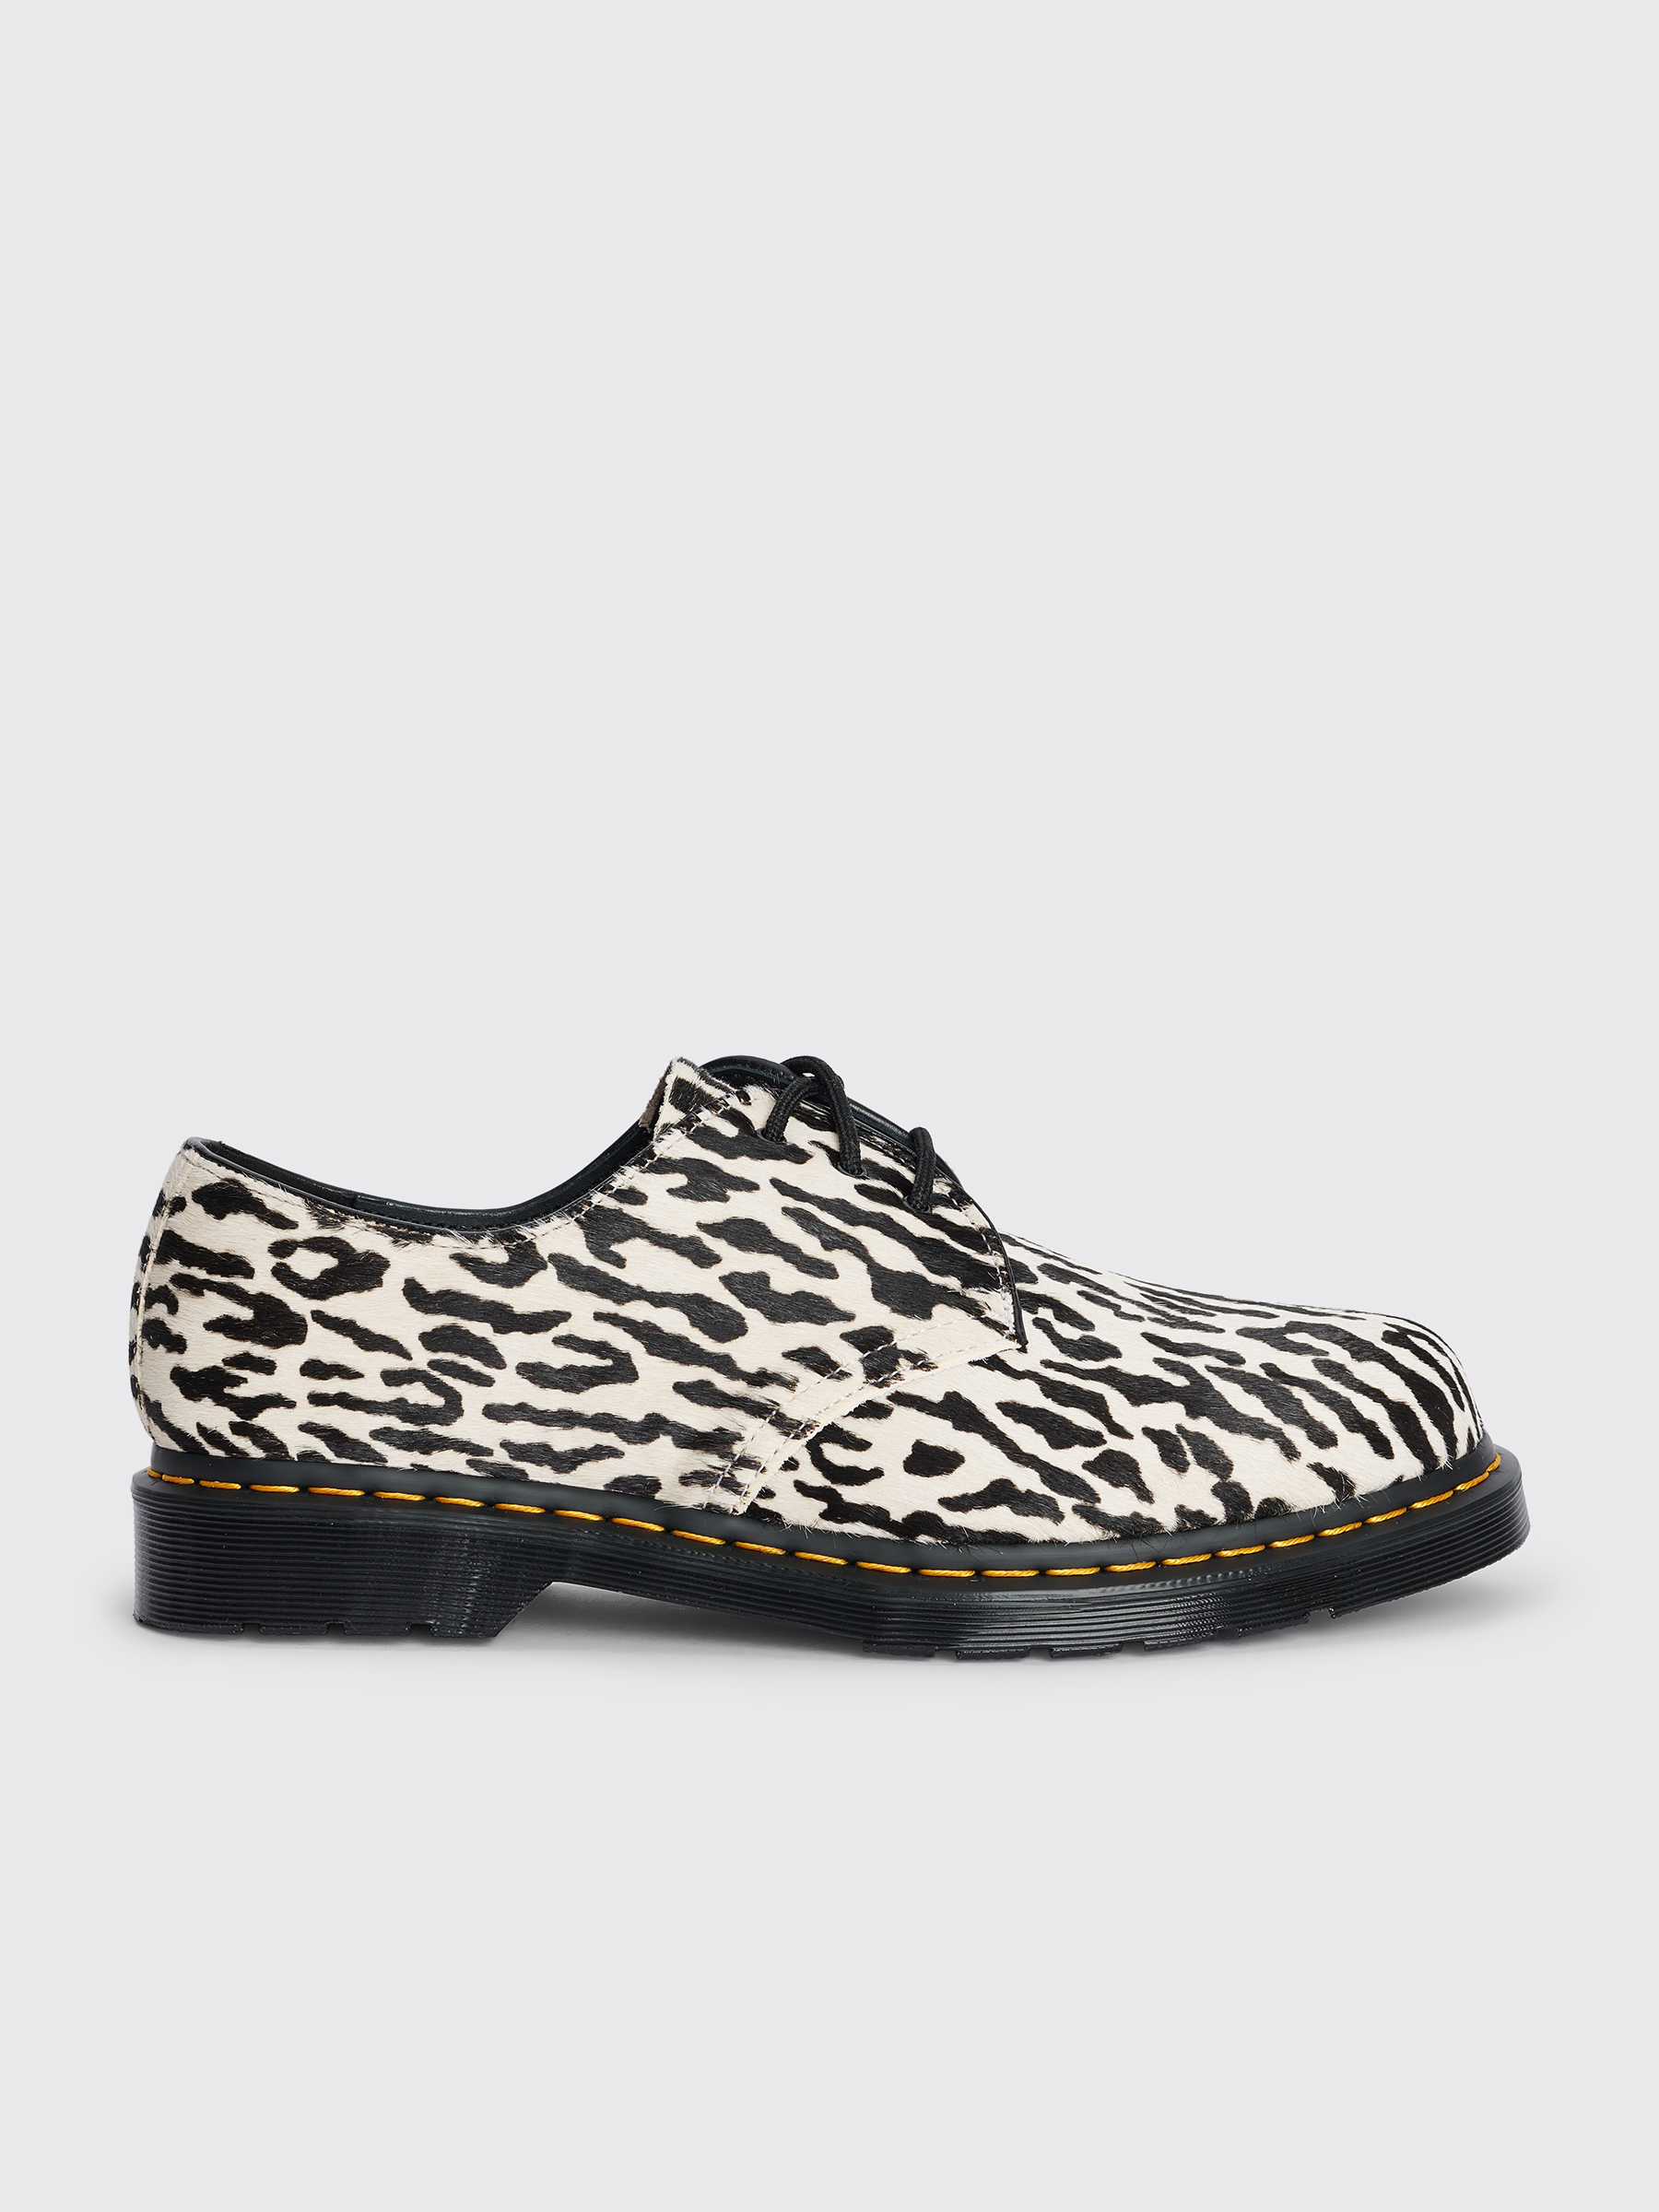 Très Bien - Dr. Martens x Wacko Maria 1461 Tiger Camo Shoes Black / White